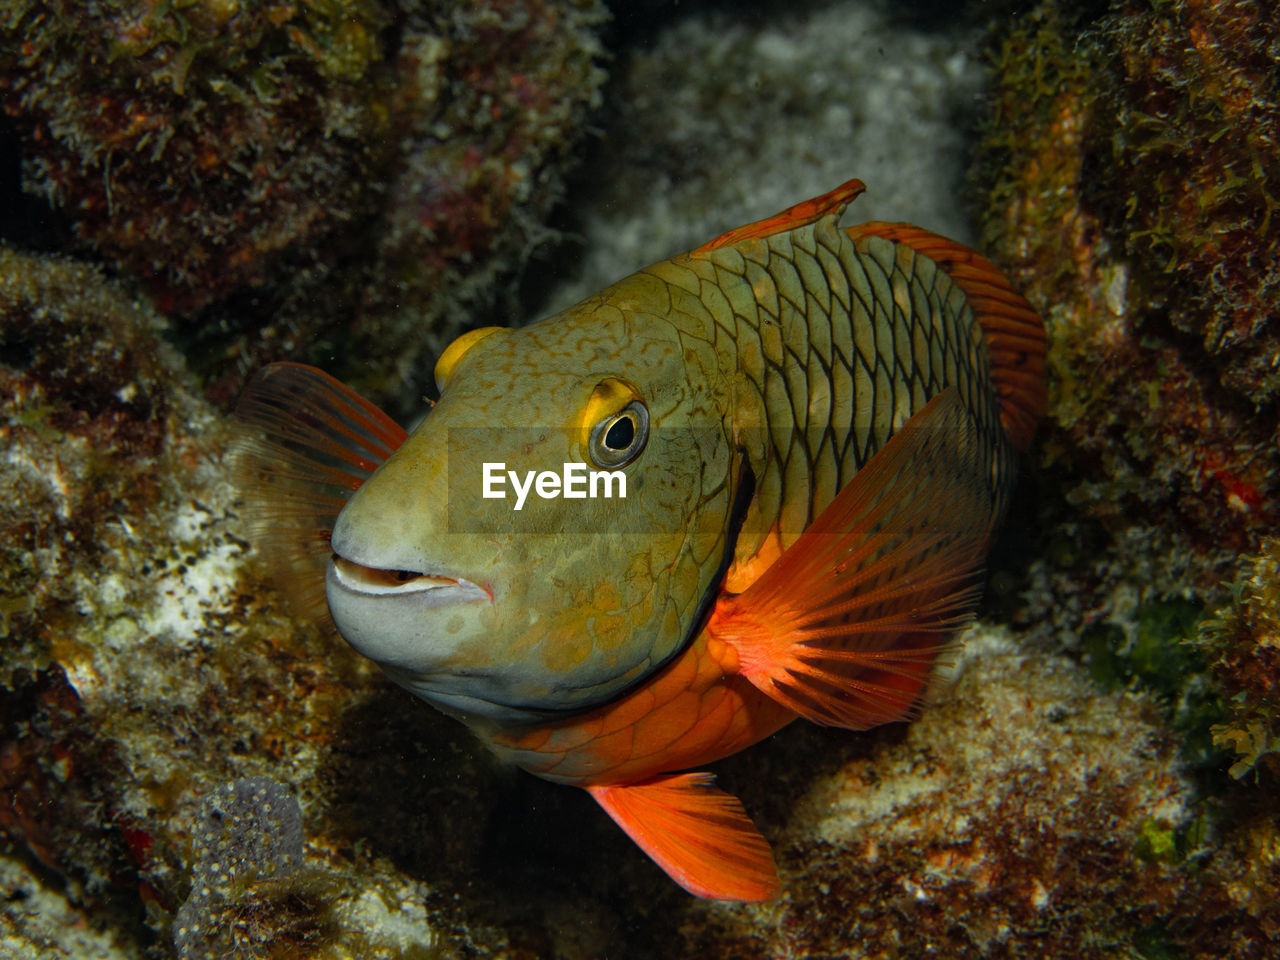 Sparisoma viride, the stoplight parrotfish